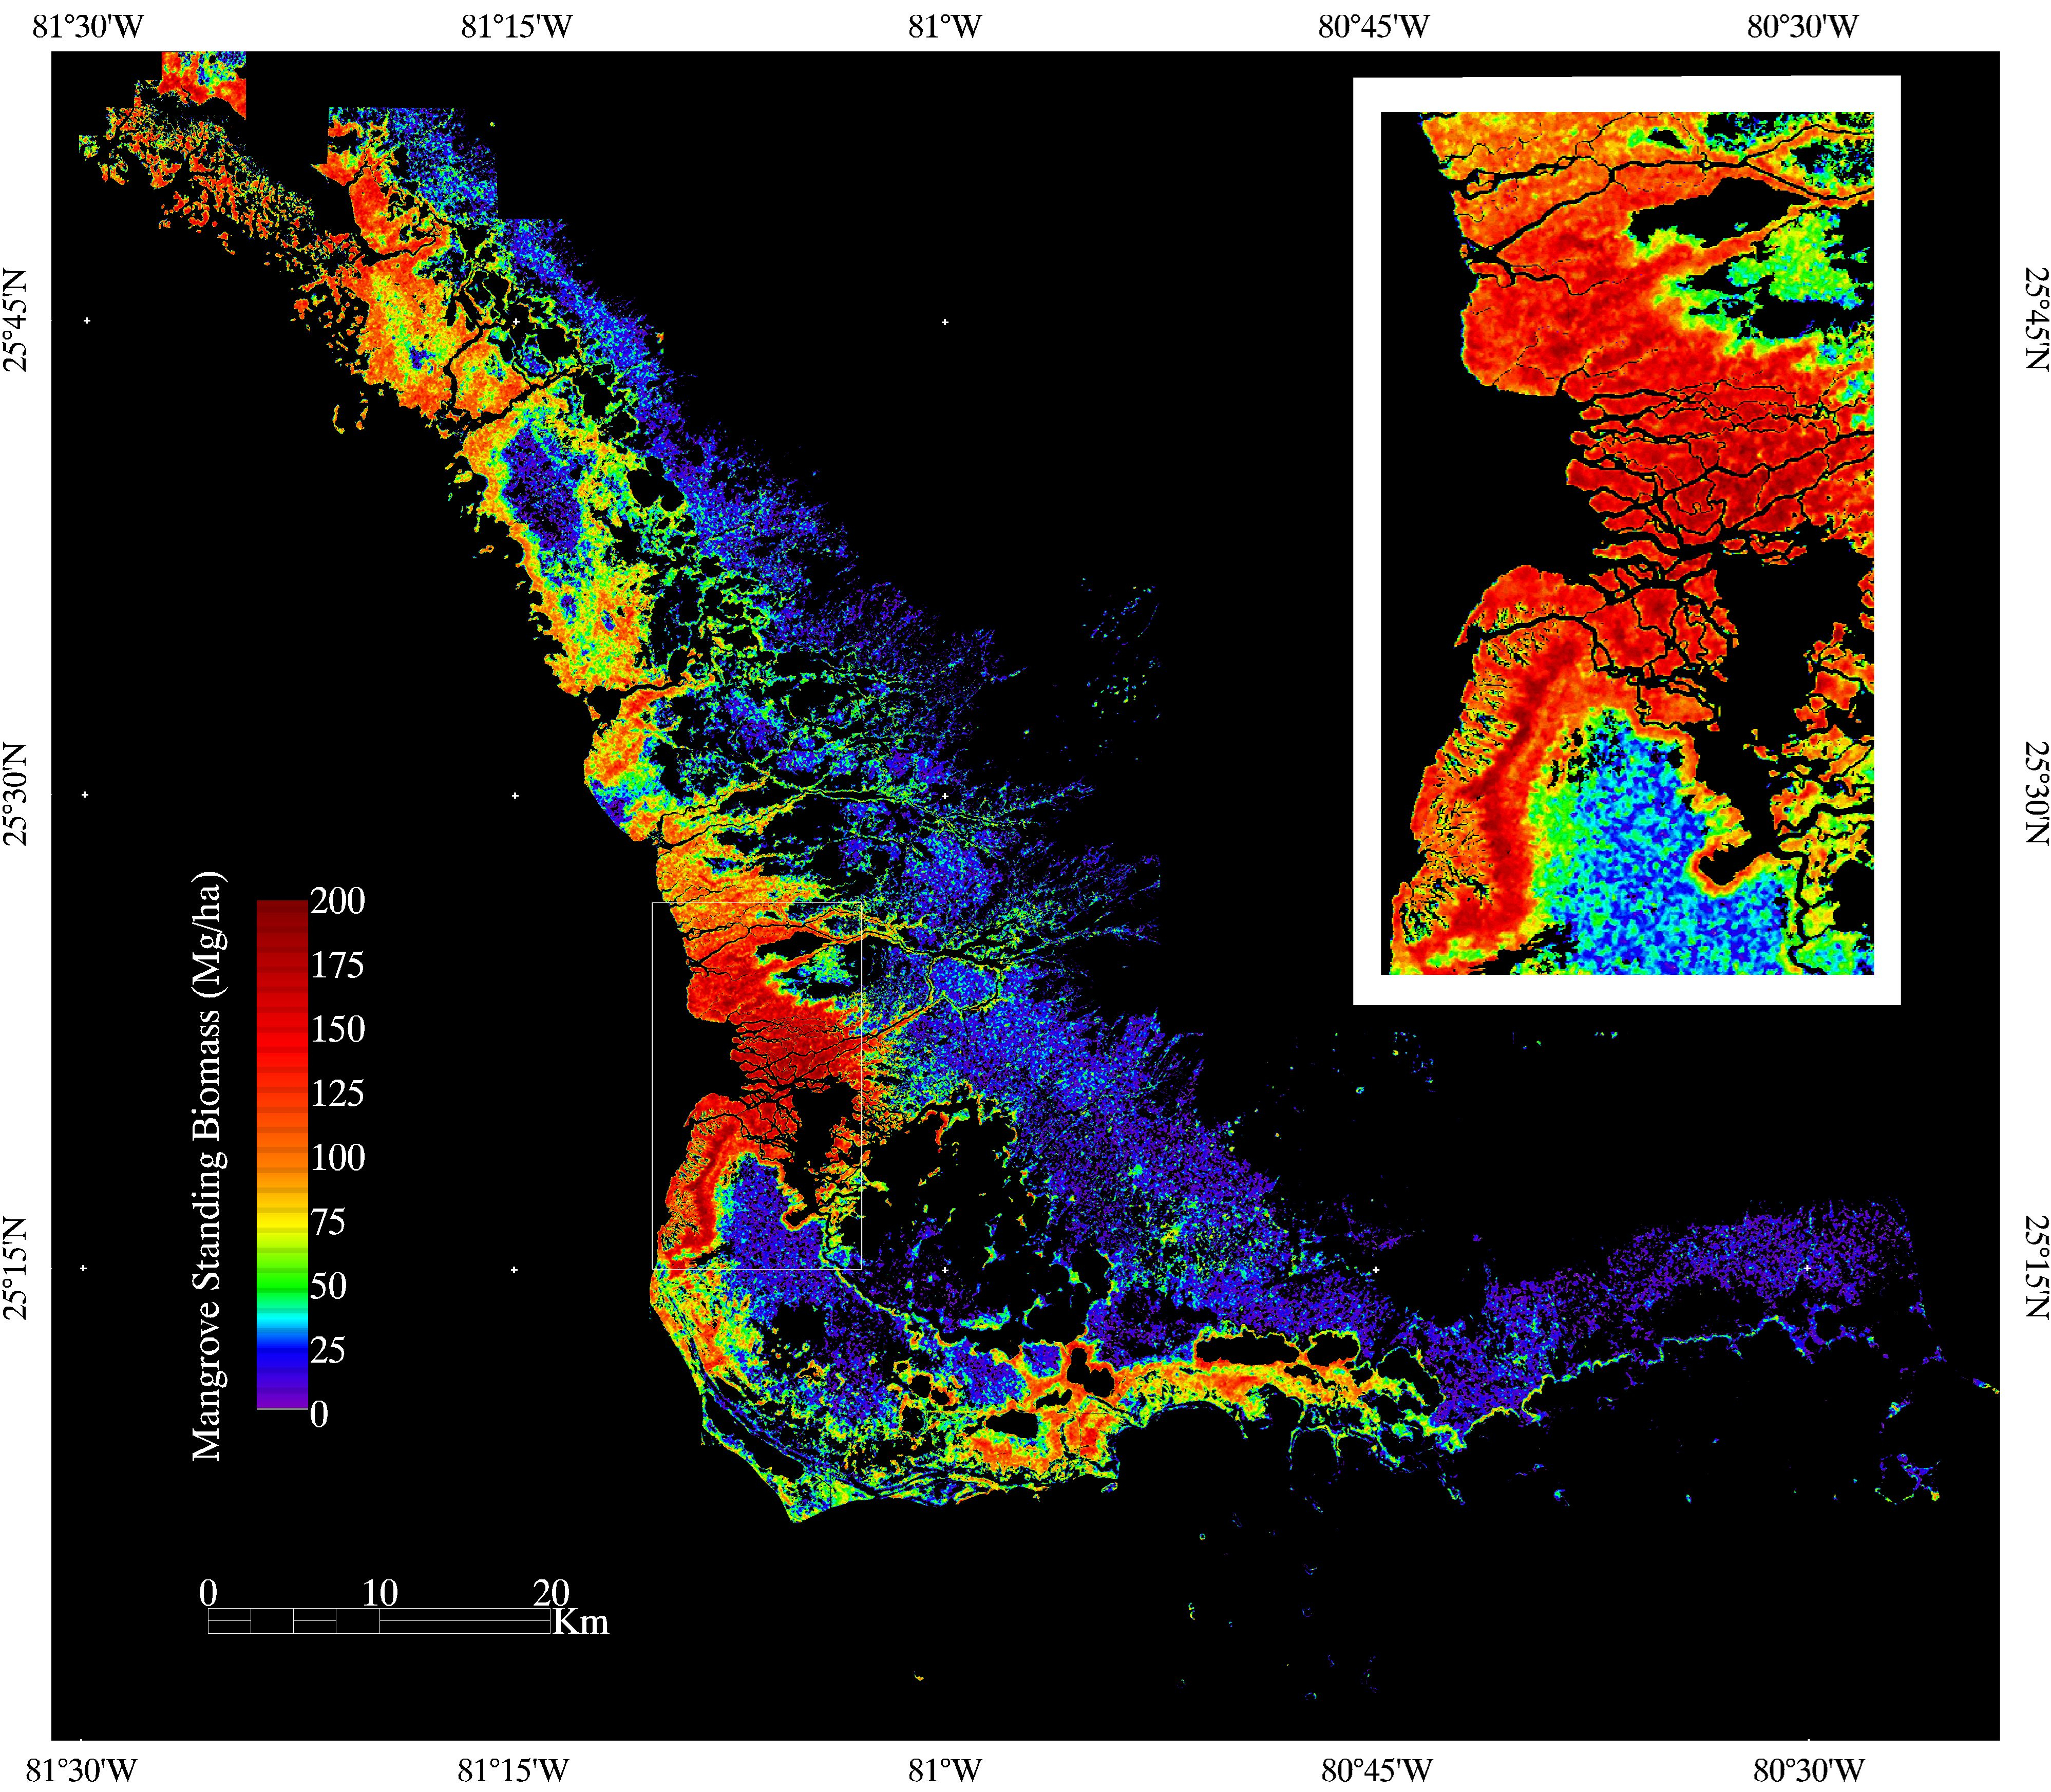 Florida Coastal Everglades Lter - Gis Data And Maps - Florida Gis Map